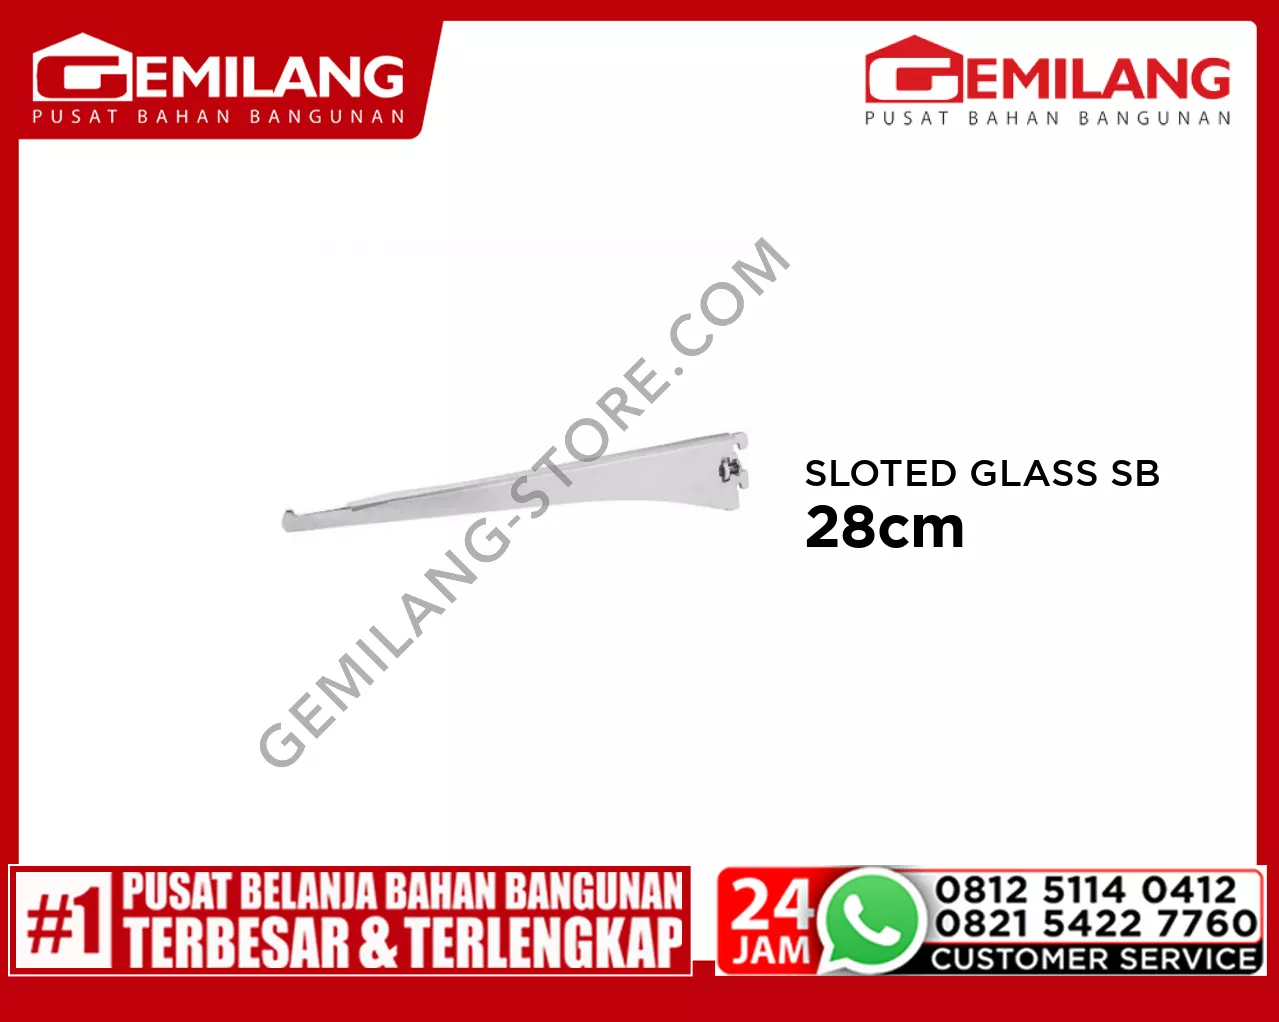 YANE SLOTED GLASS SHELF BRACKET DB303D CH STEEL 250 (2pc)